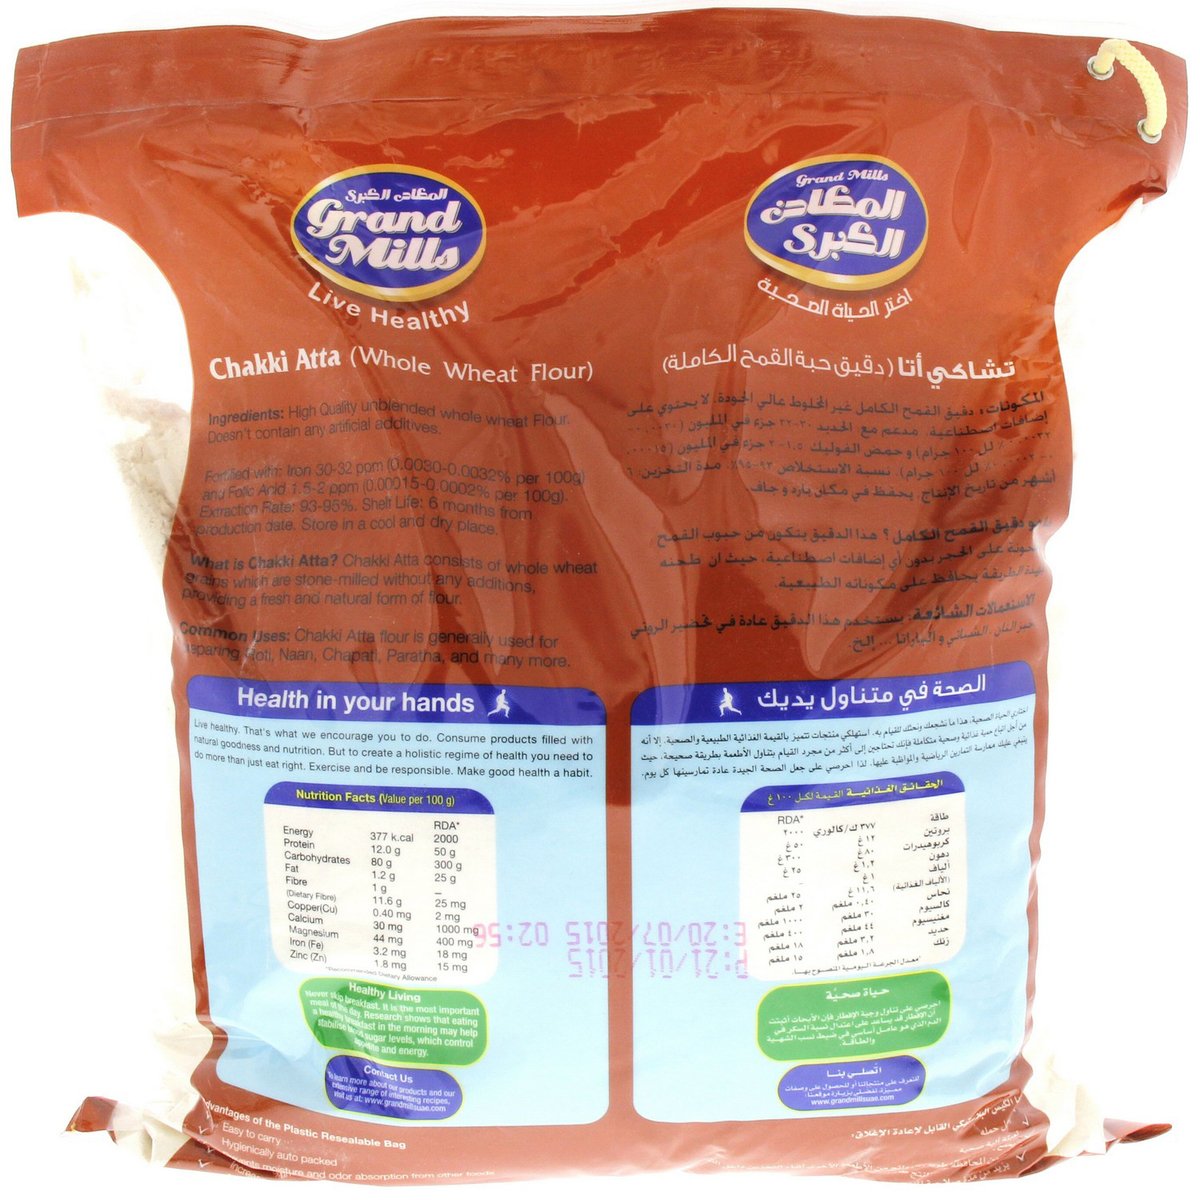 Grand Mills Chakki Atta Whole Wheat Flour 10 kg